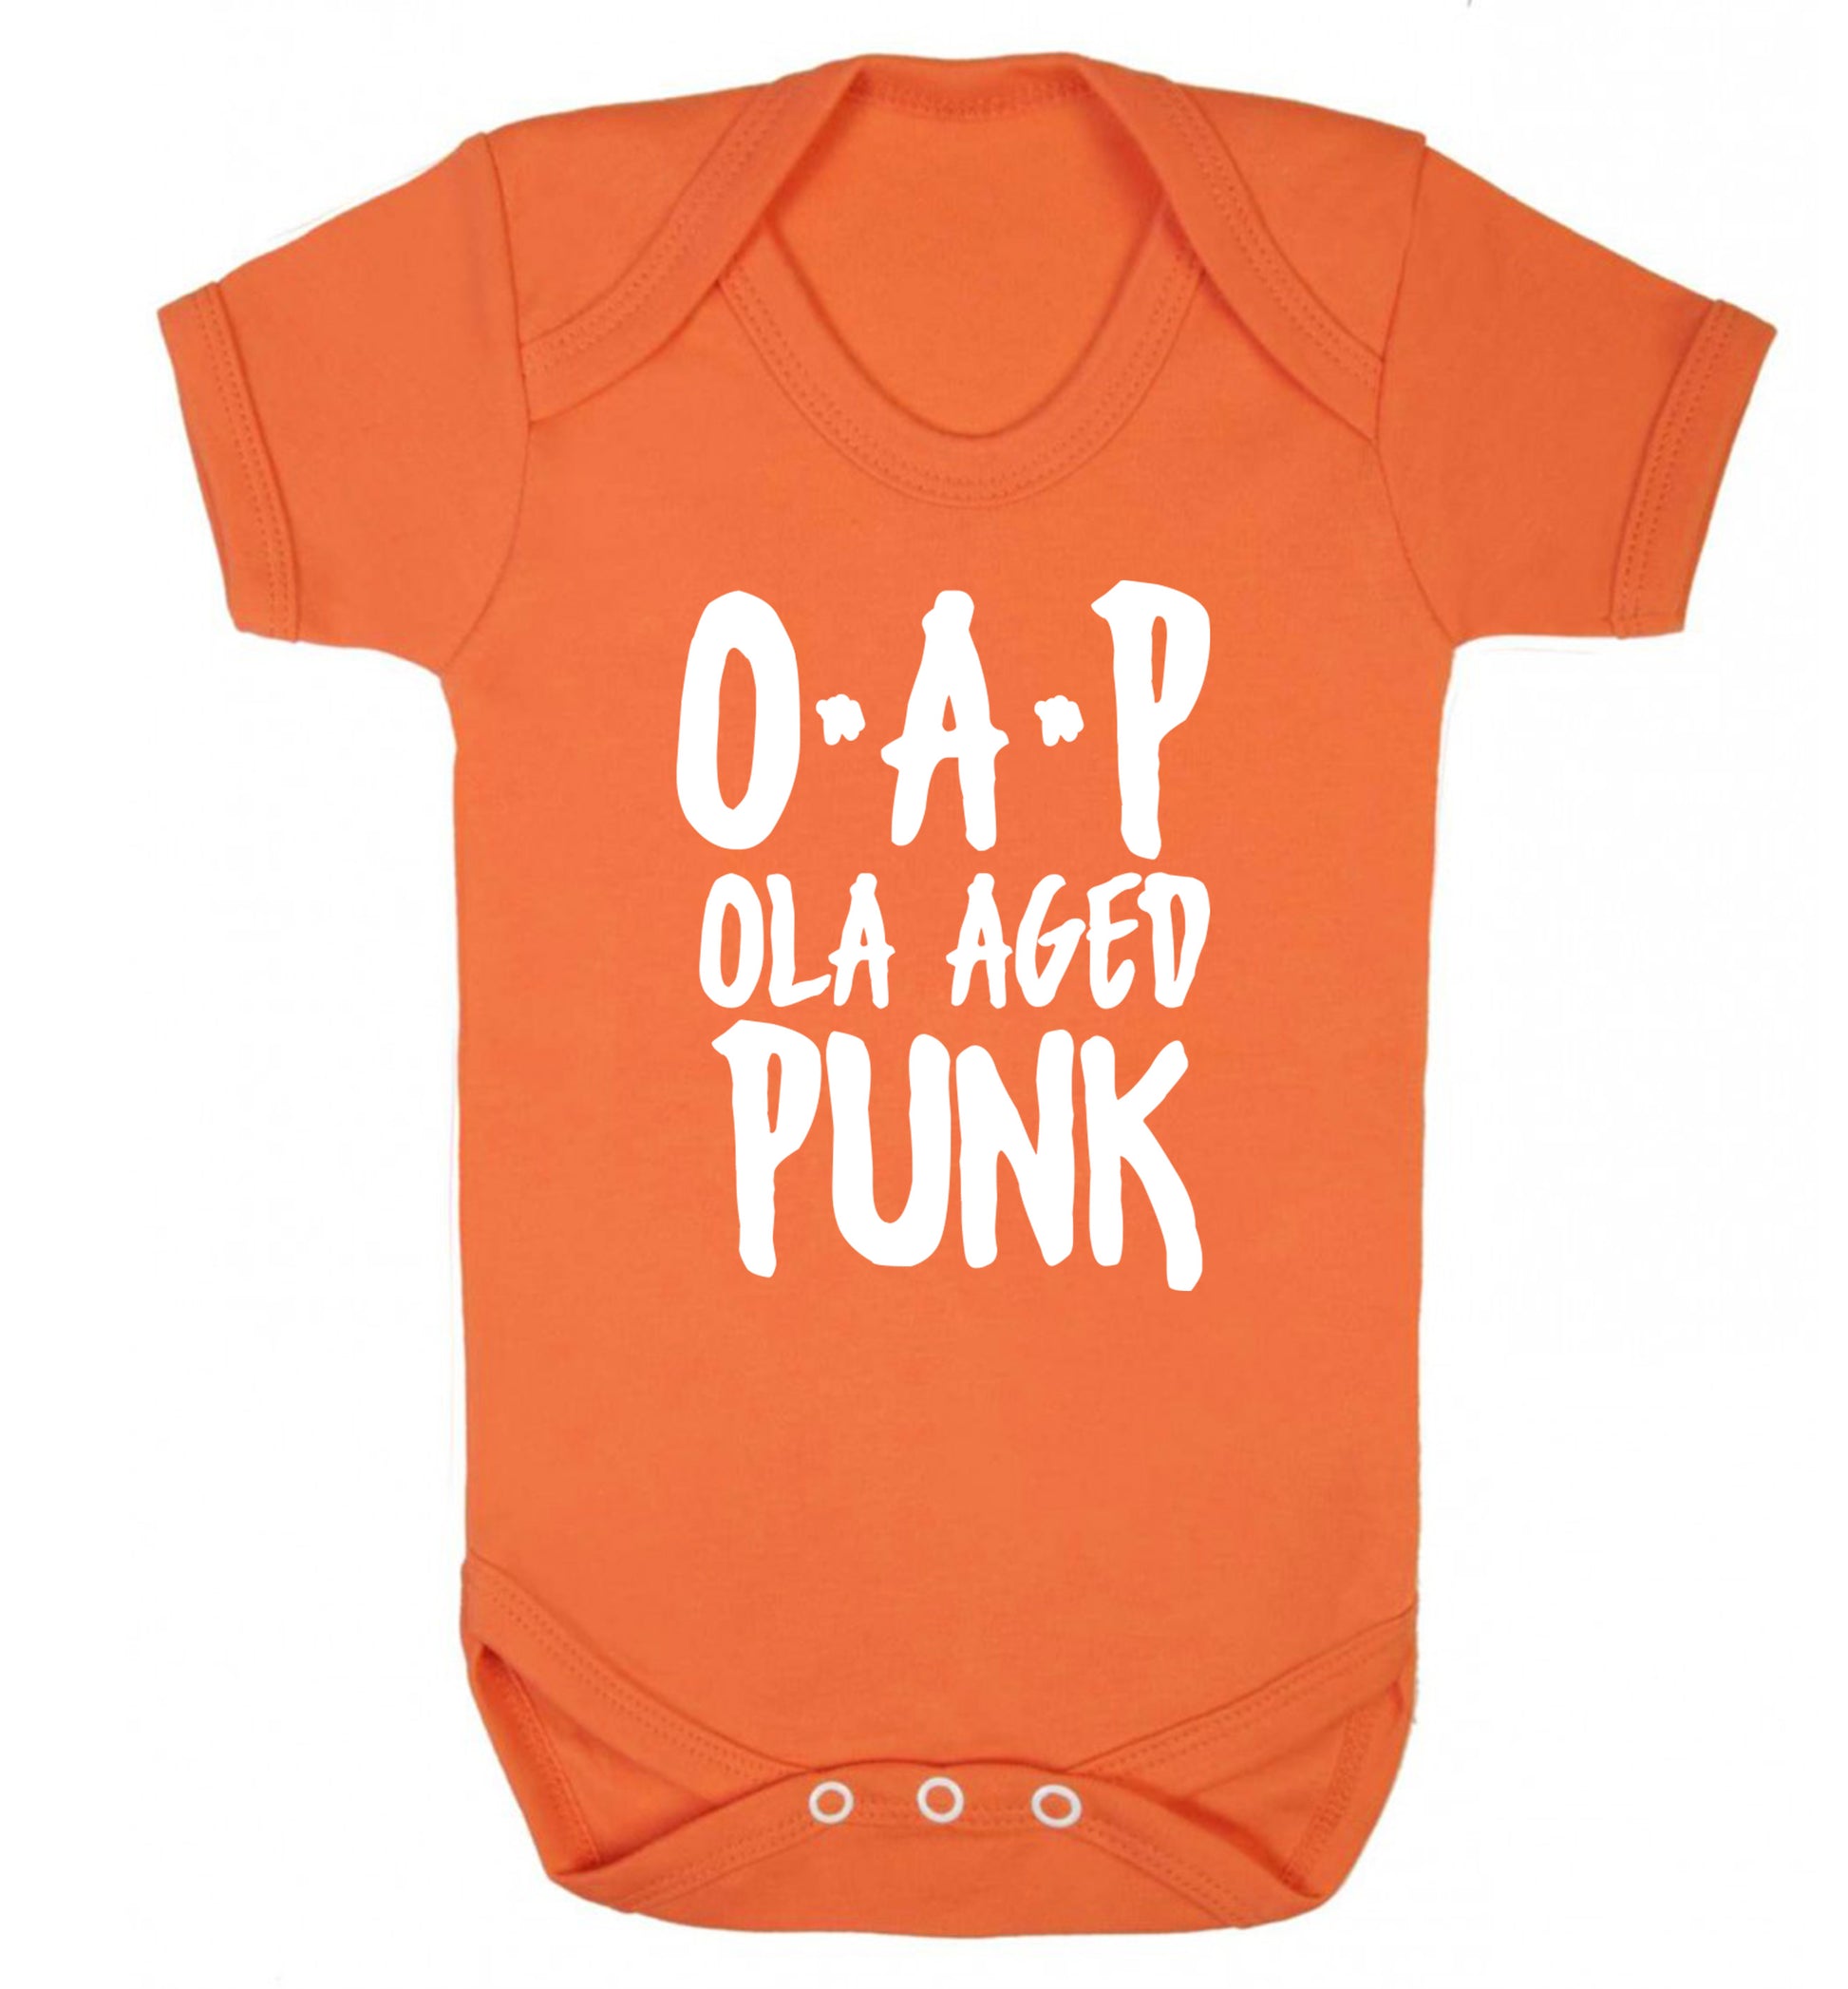 O.A.P Old Aged Punk Baby Vest orange 18-24 months